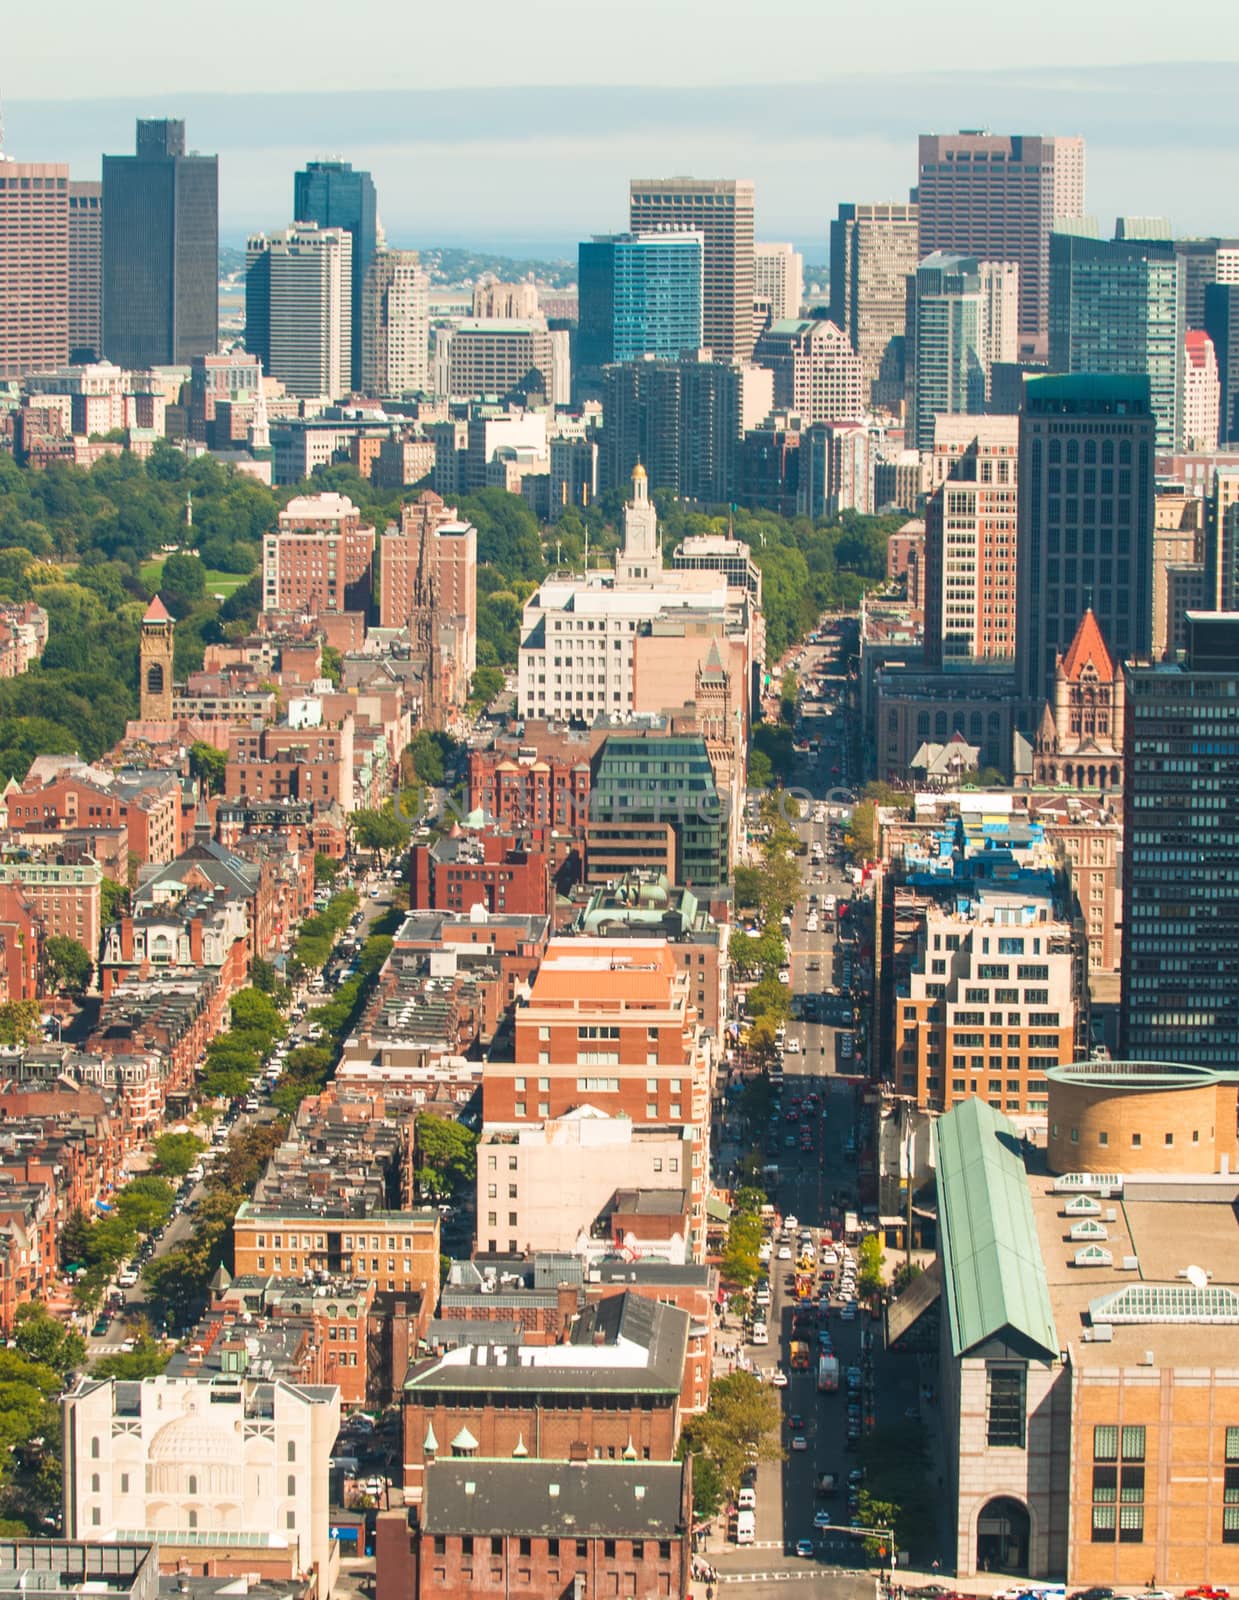 Aerial view of Boston's Back Bay neighborhood